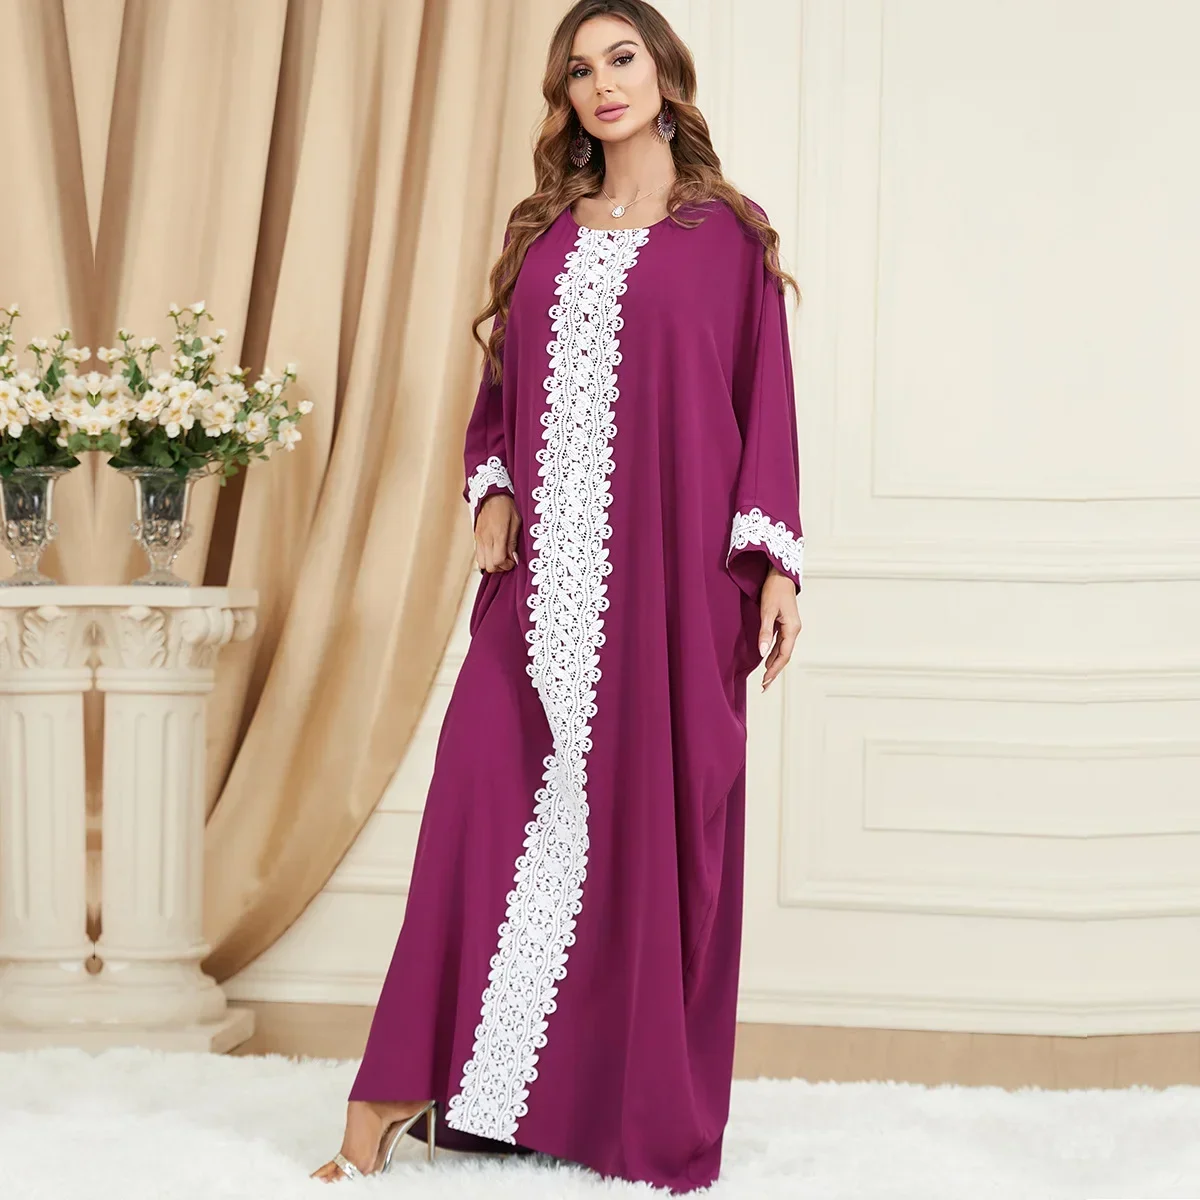 

Women Dress Saudi Arabia Dubai Abaya Casual Bat Sleeve Outfit Muslim Dress Robe Elegante Femme Islamic Clothing Plus-size Dress